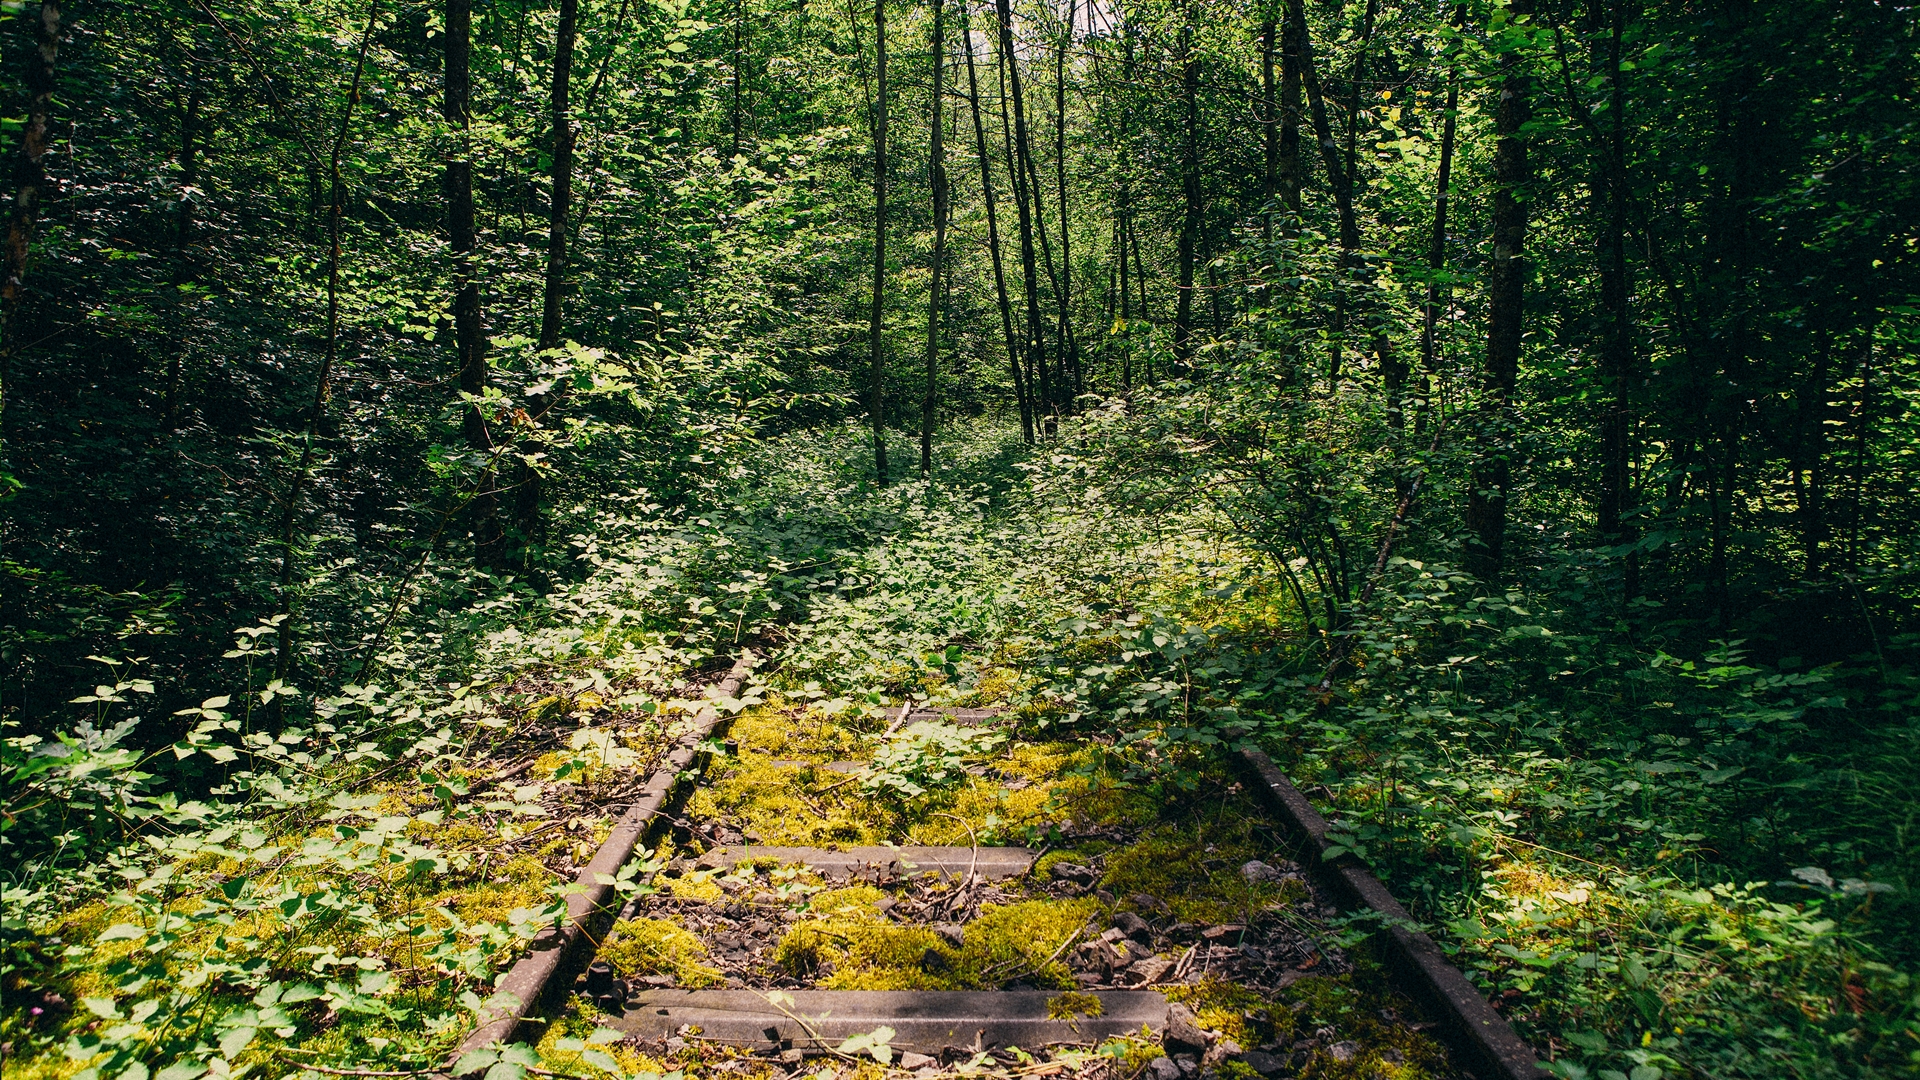 vías férreas cubiertas de vegetación a través de un bosque denso